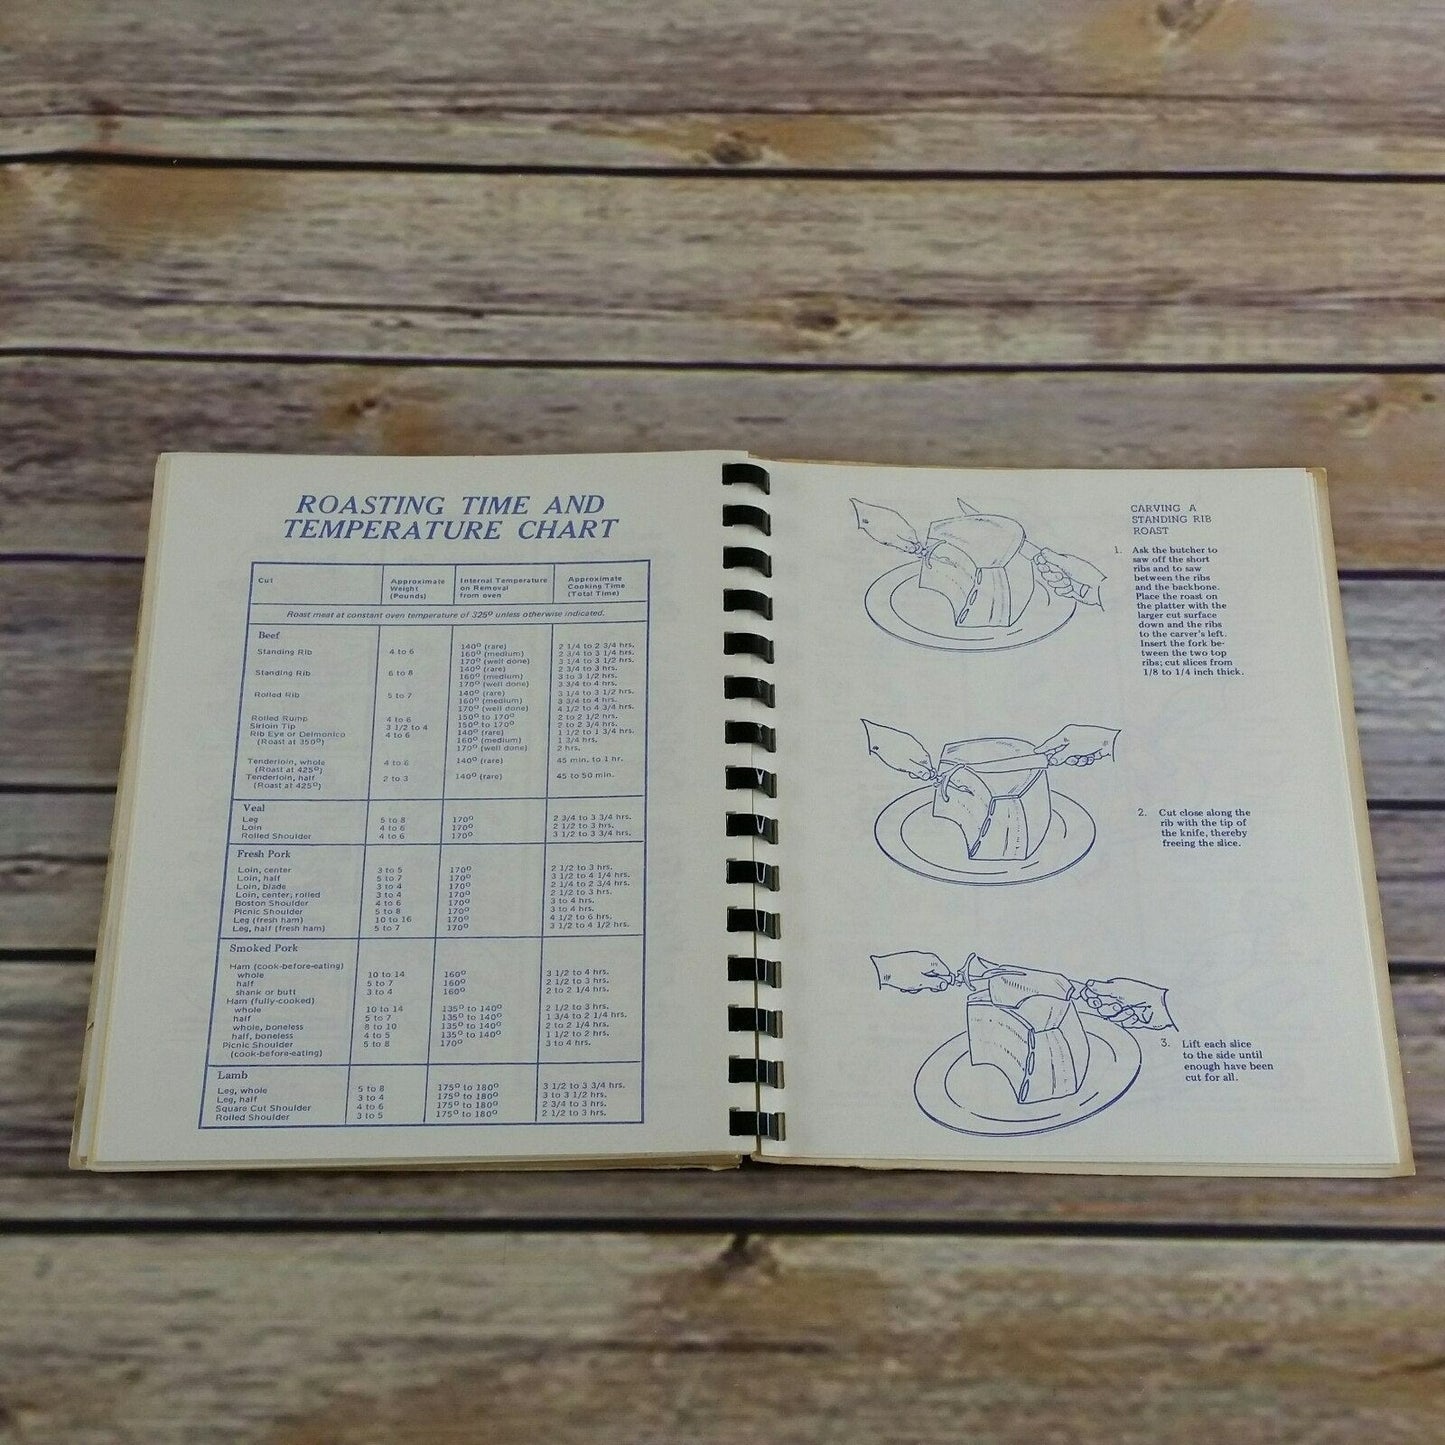 Vintage Cookbook Fortuna California Presbyterian Church Hometown Recipes Spiral Bound 1980s Favorite Hometown Recipes